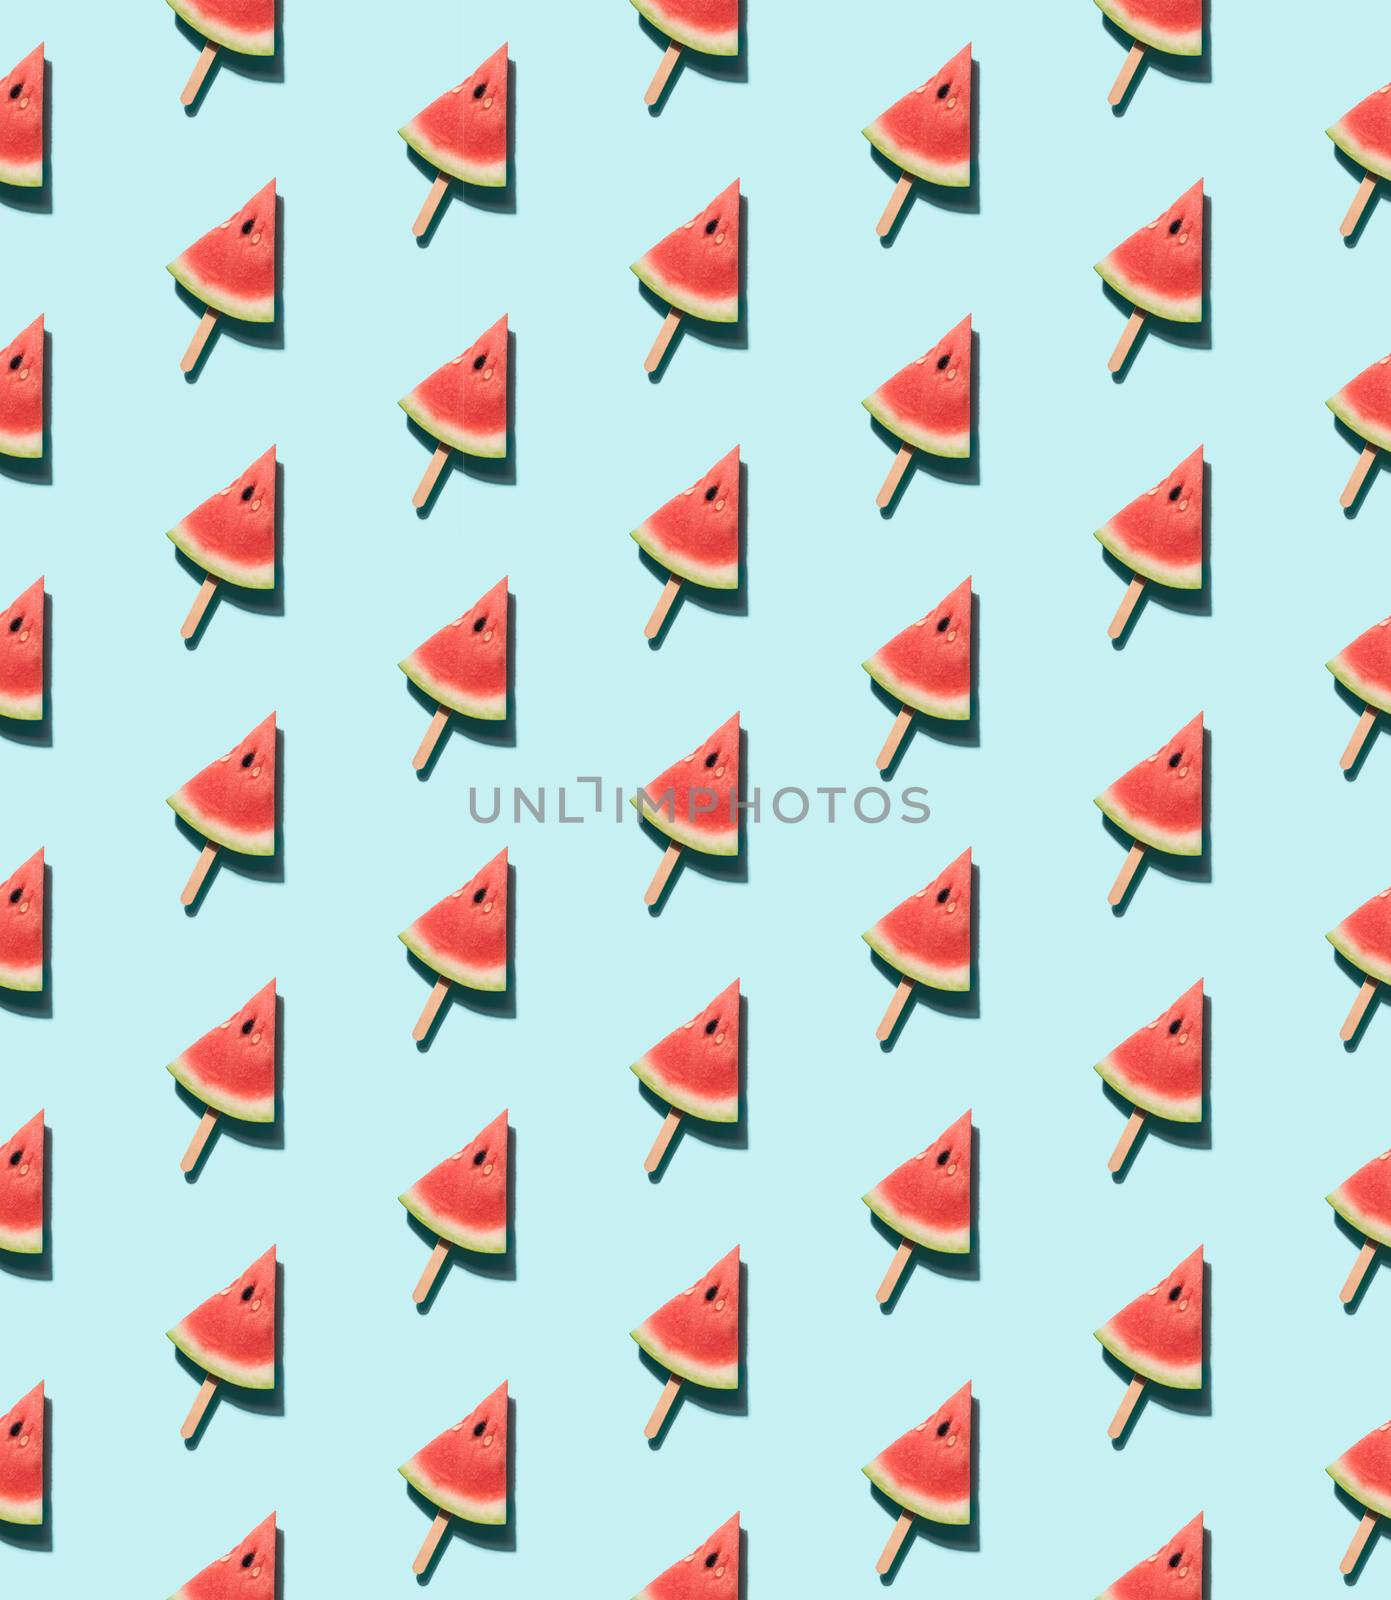 watermelon popsicle on blue seamles pattern by fascinadora